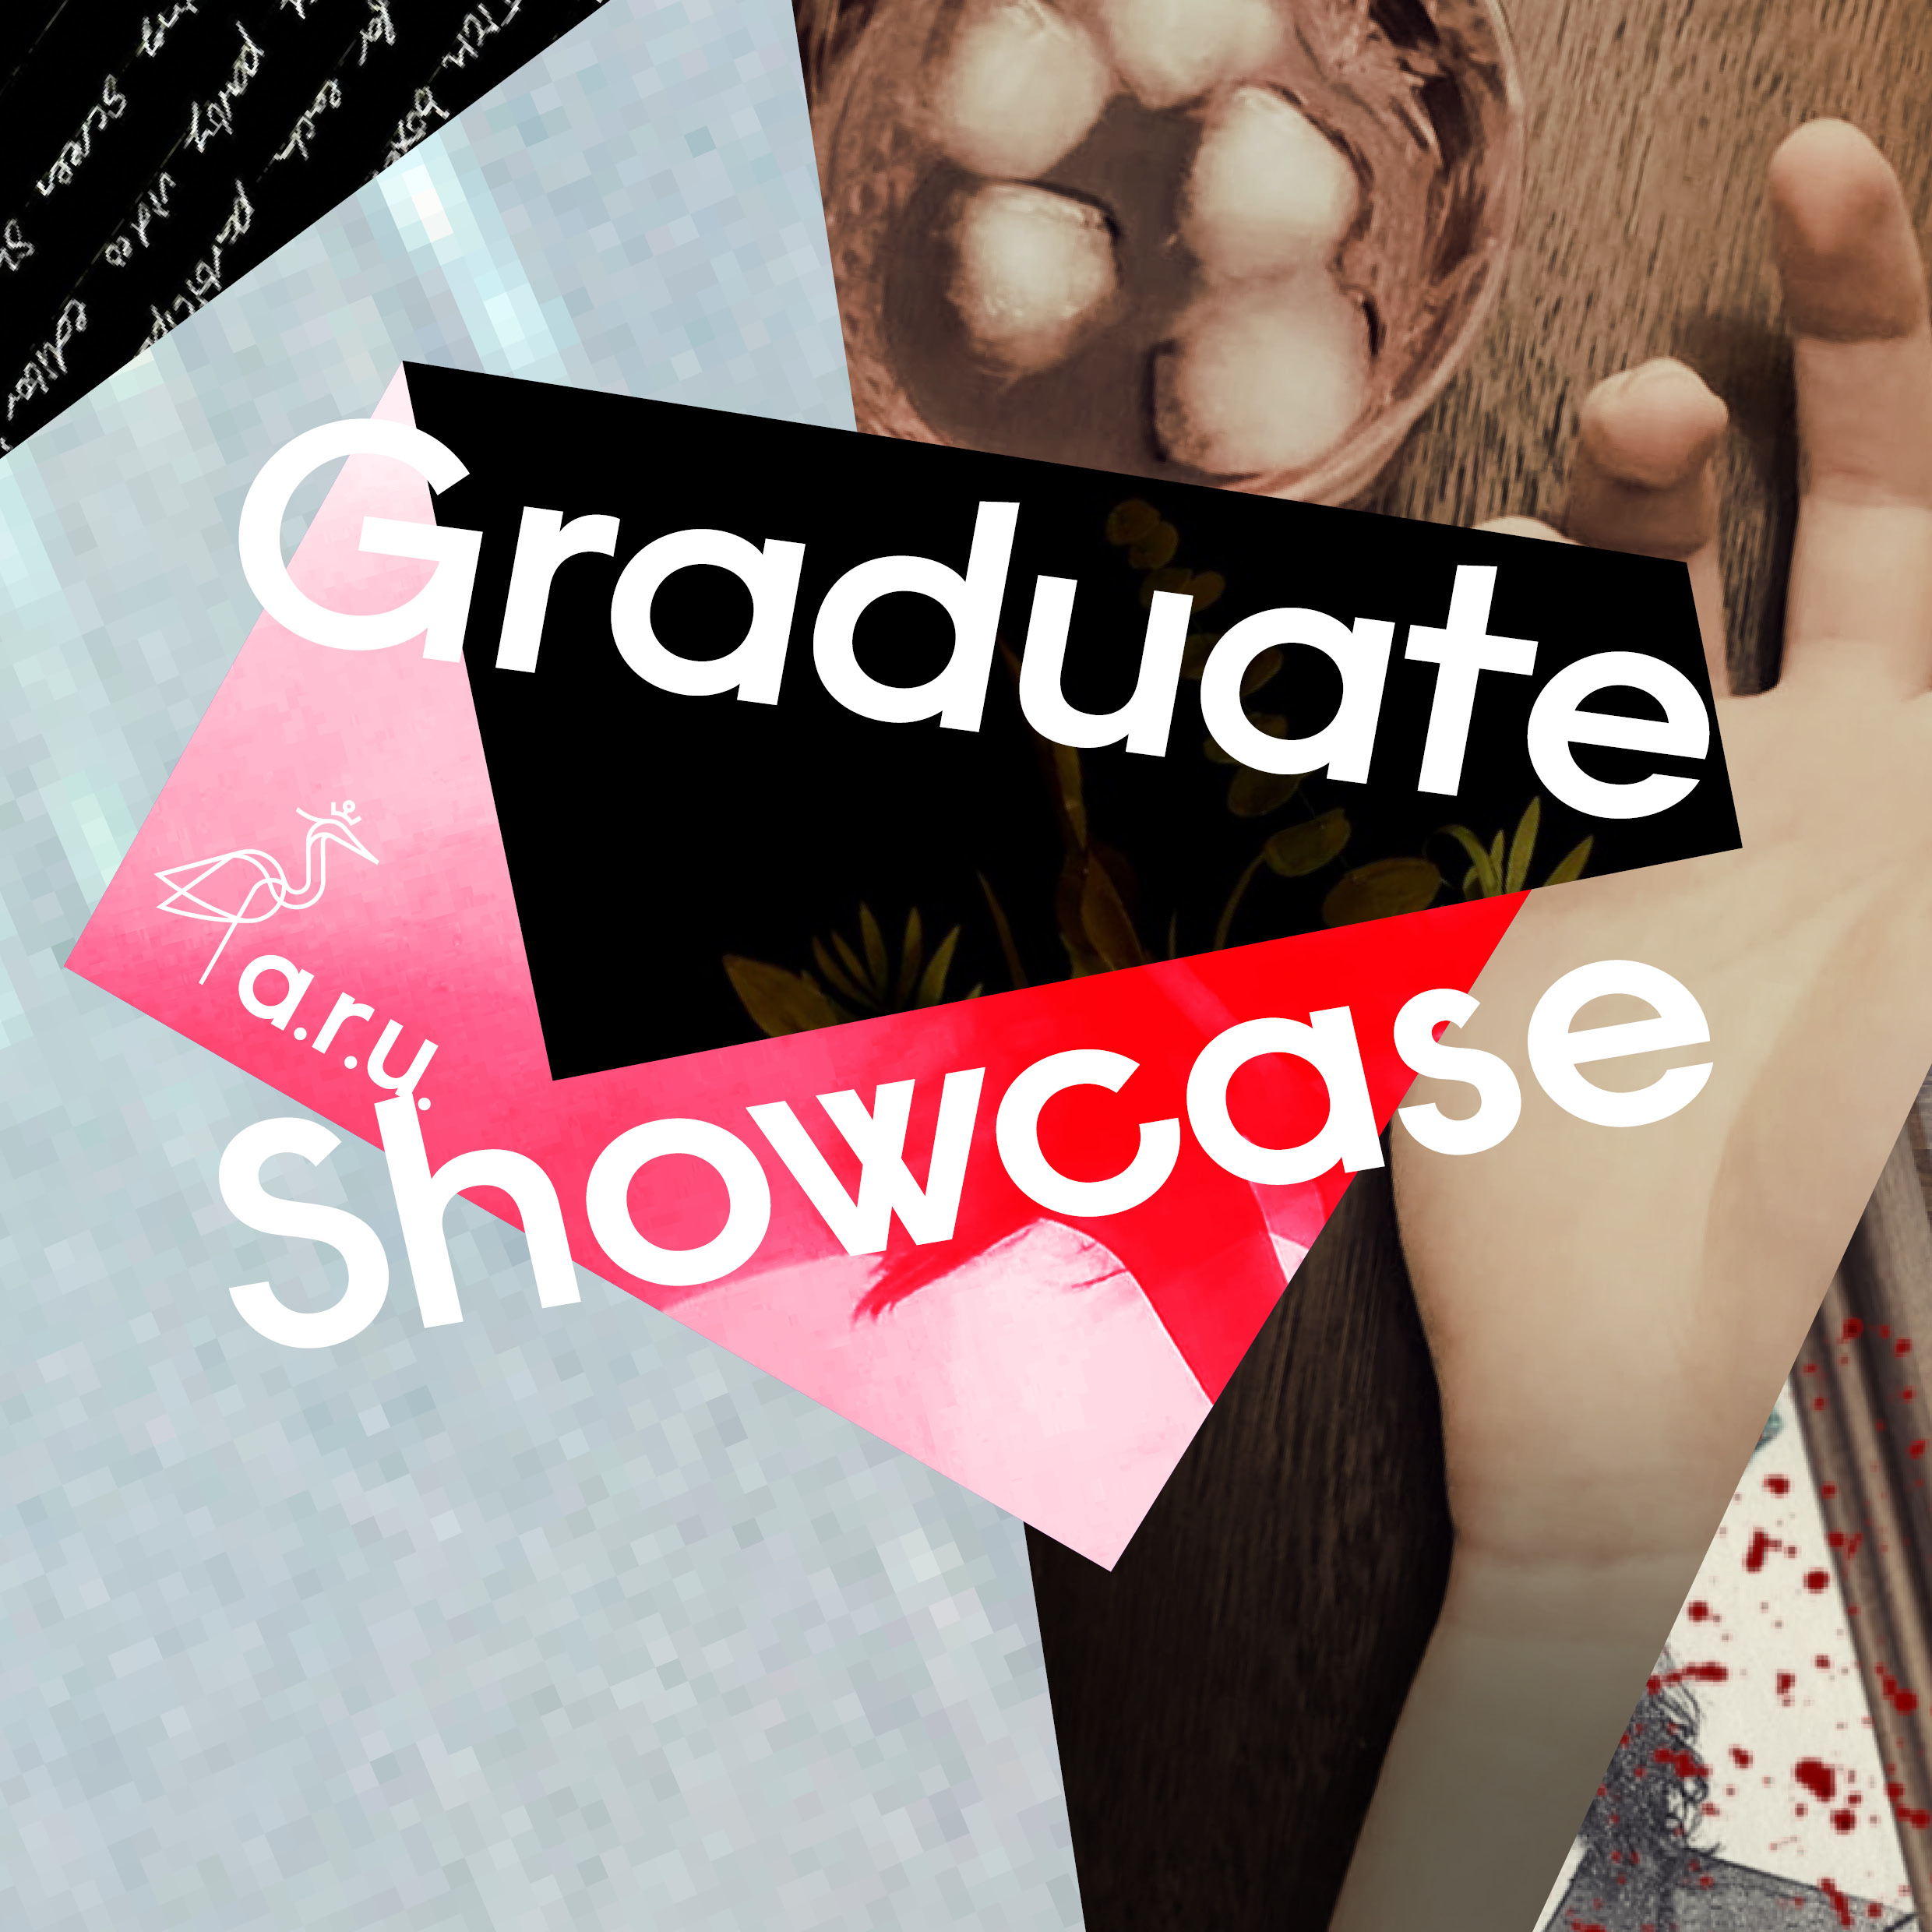 Graduate Showcase image pile.